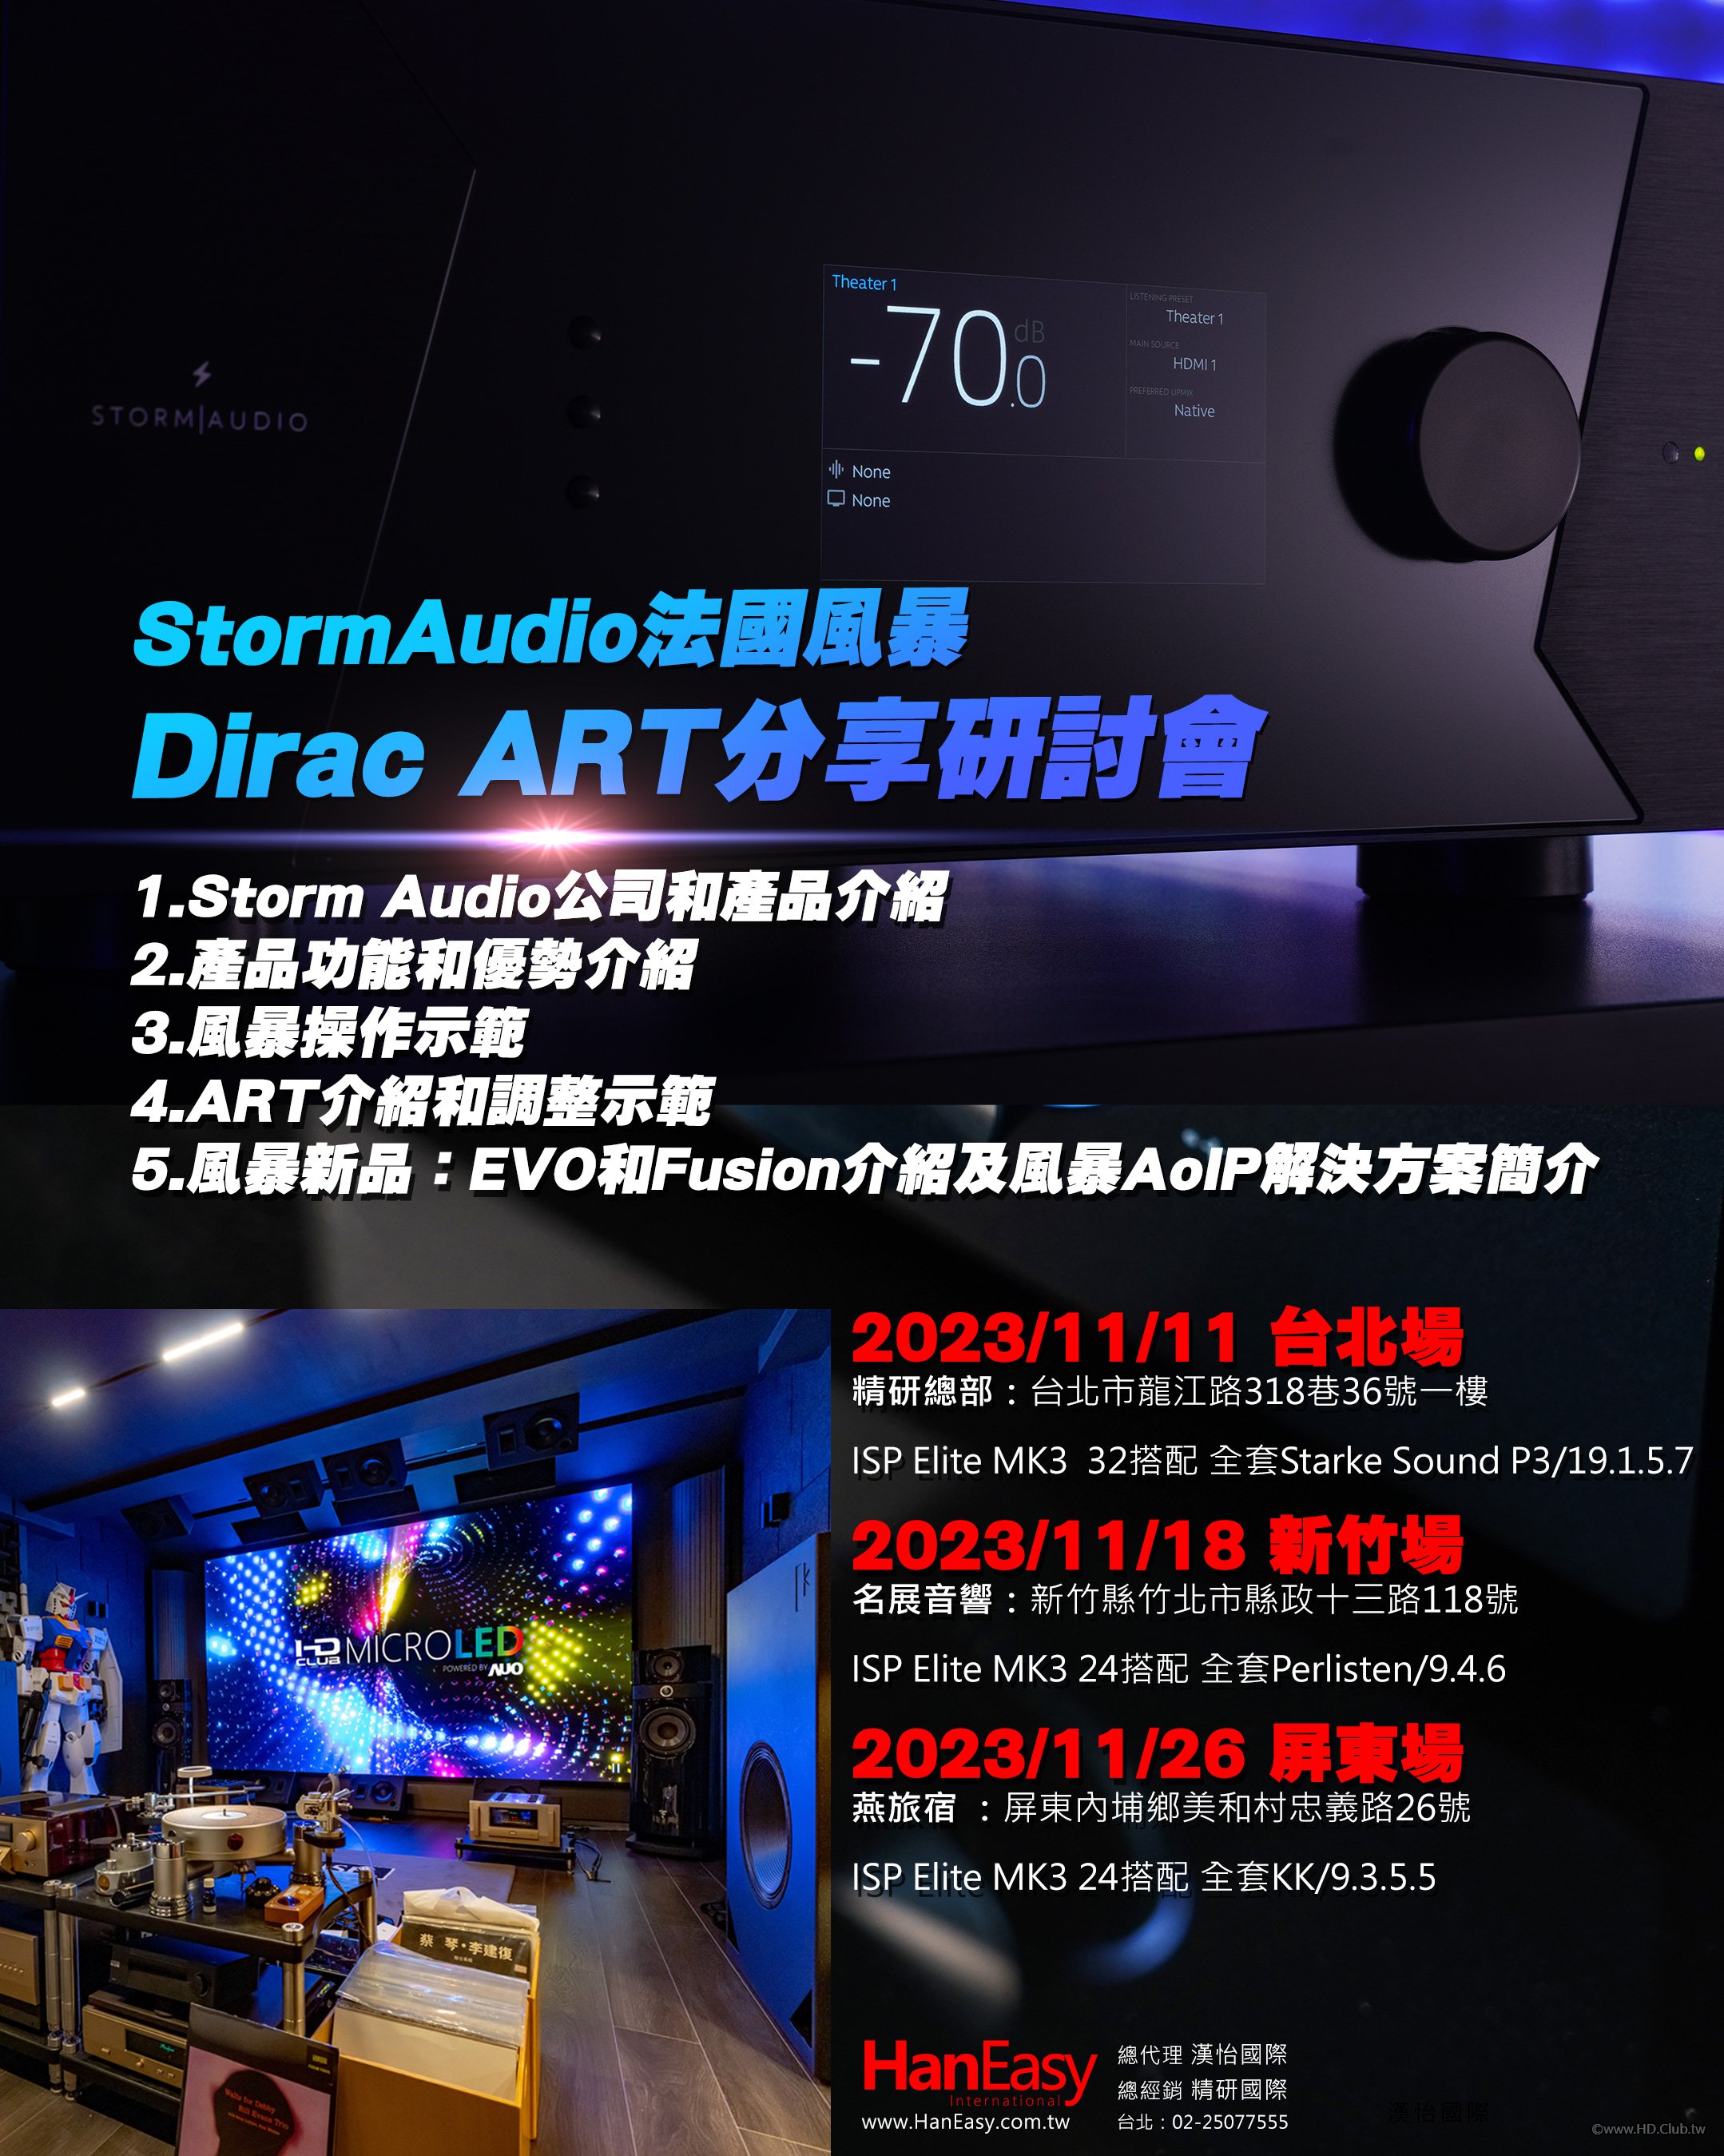 StormAudio法國風暴Dirac ART分享研討會